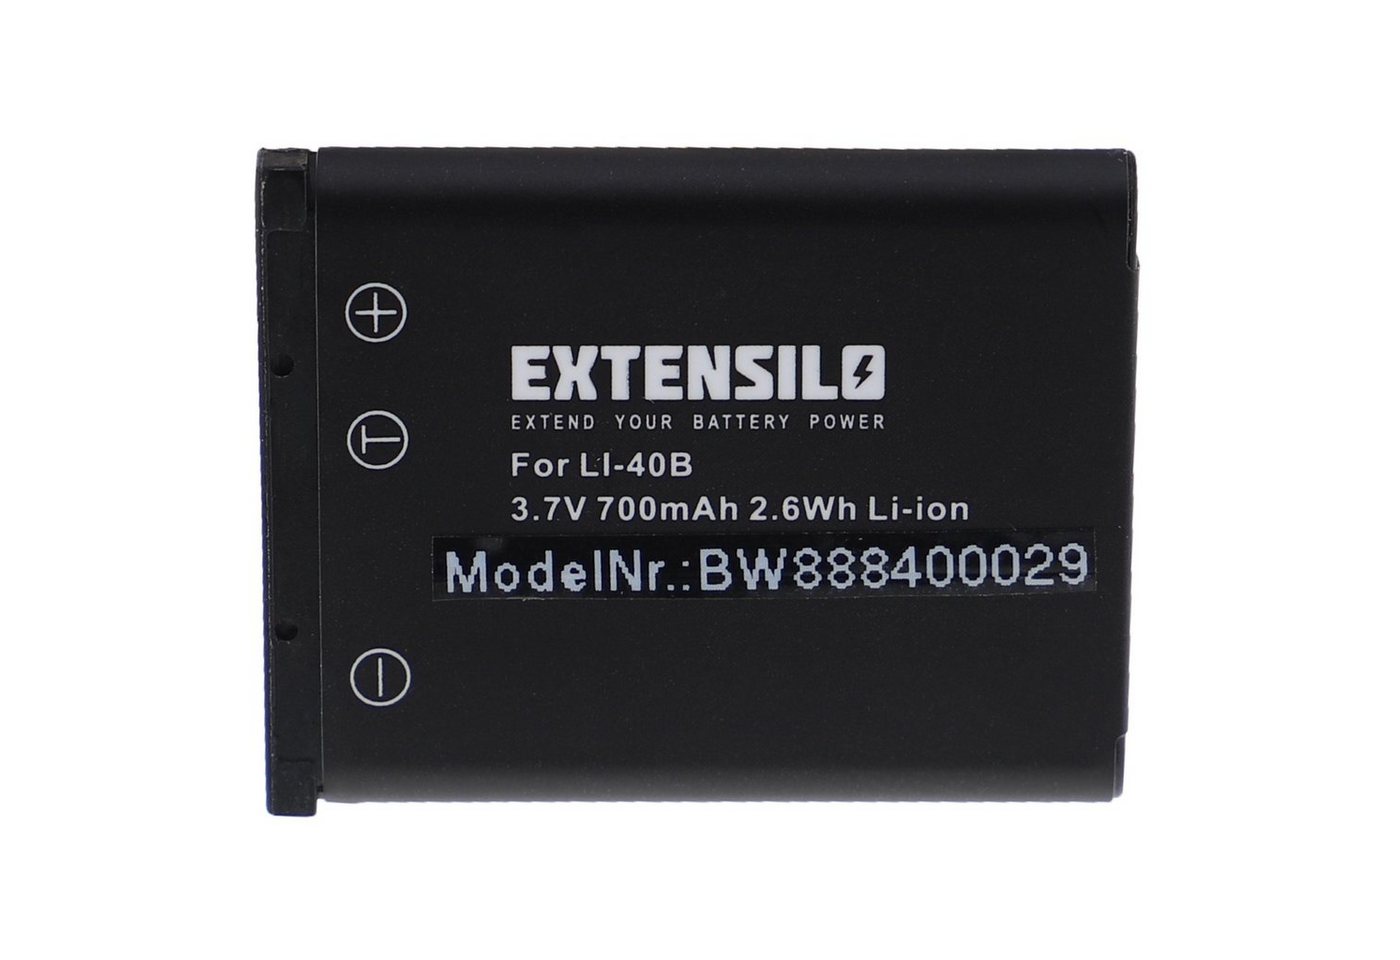 Extensilo kompatibel mit Pentax Optio RS1500, T30, V10, V15, W30 Kamera-Akku Li-Ion 700 mAh (3,7 V) von Extensilo